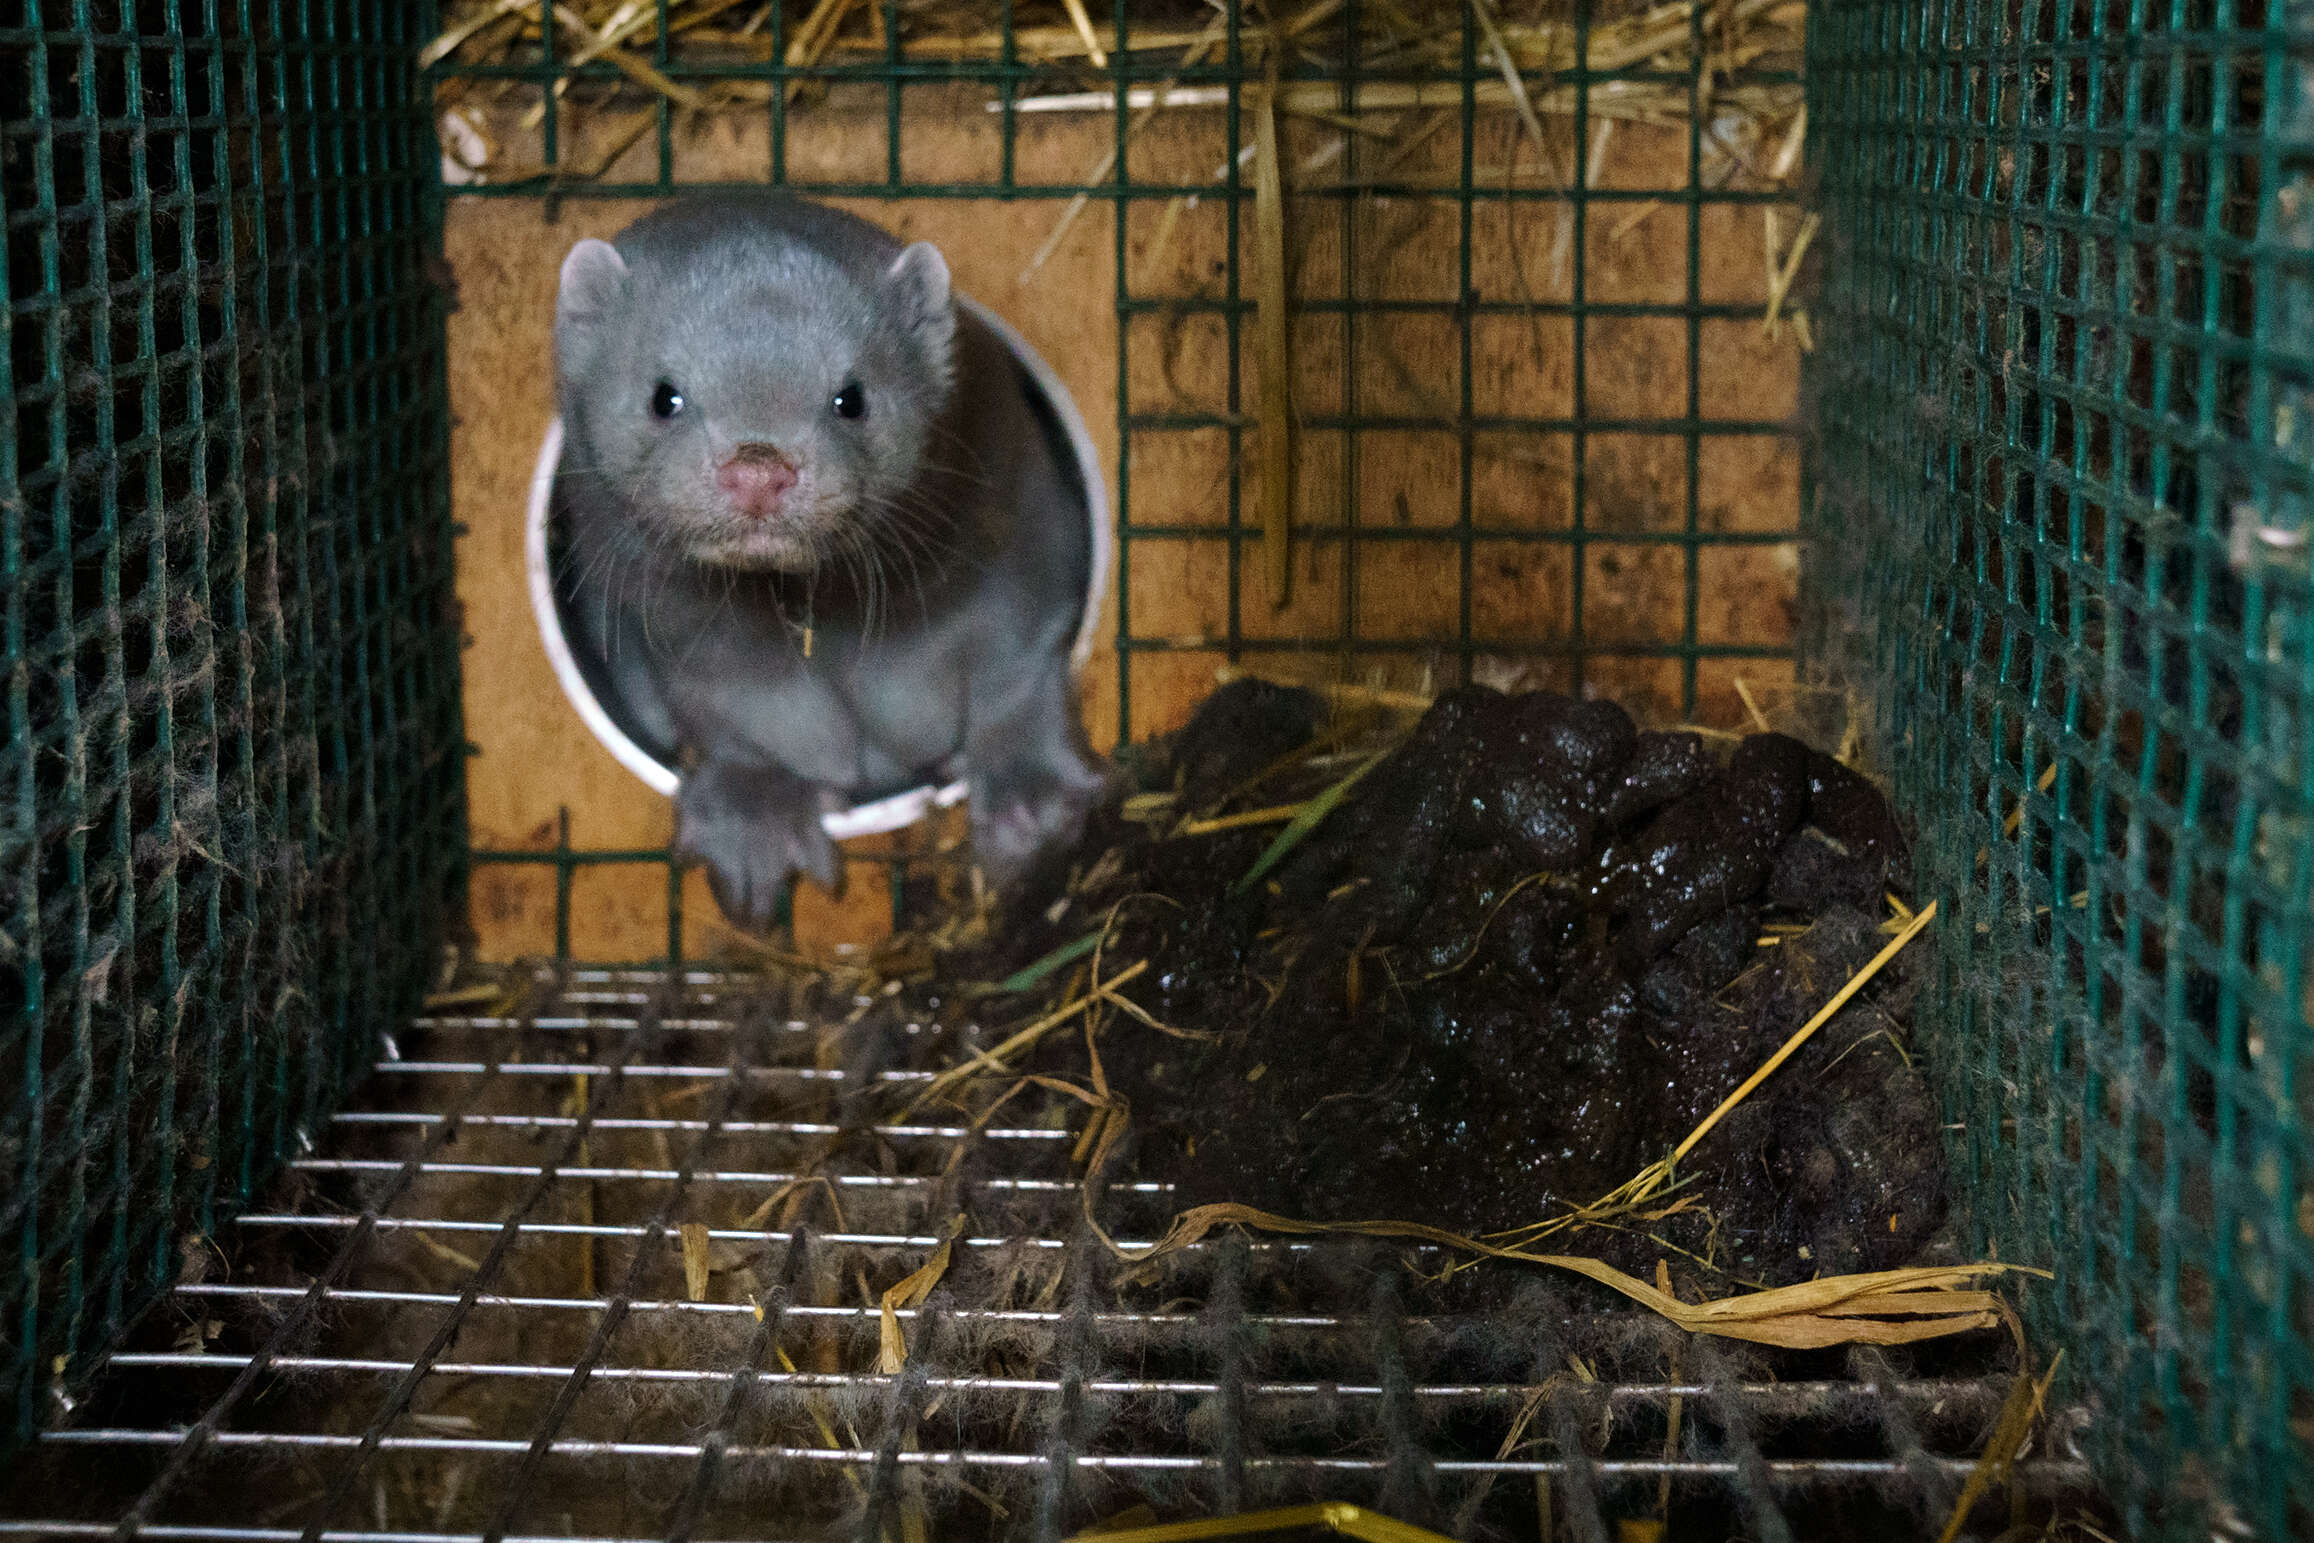 Animal stuck inside cage at fur farm